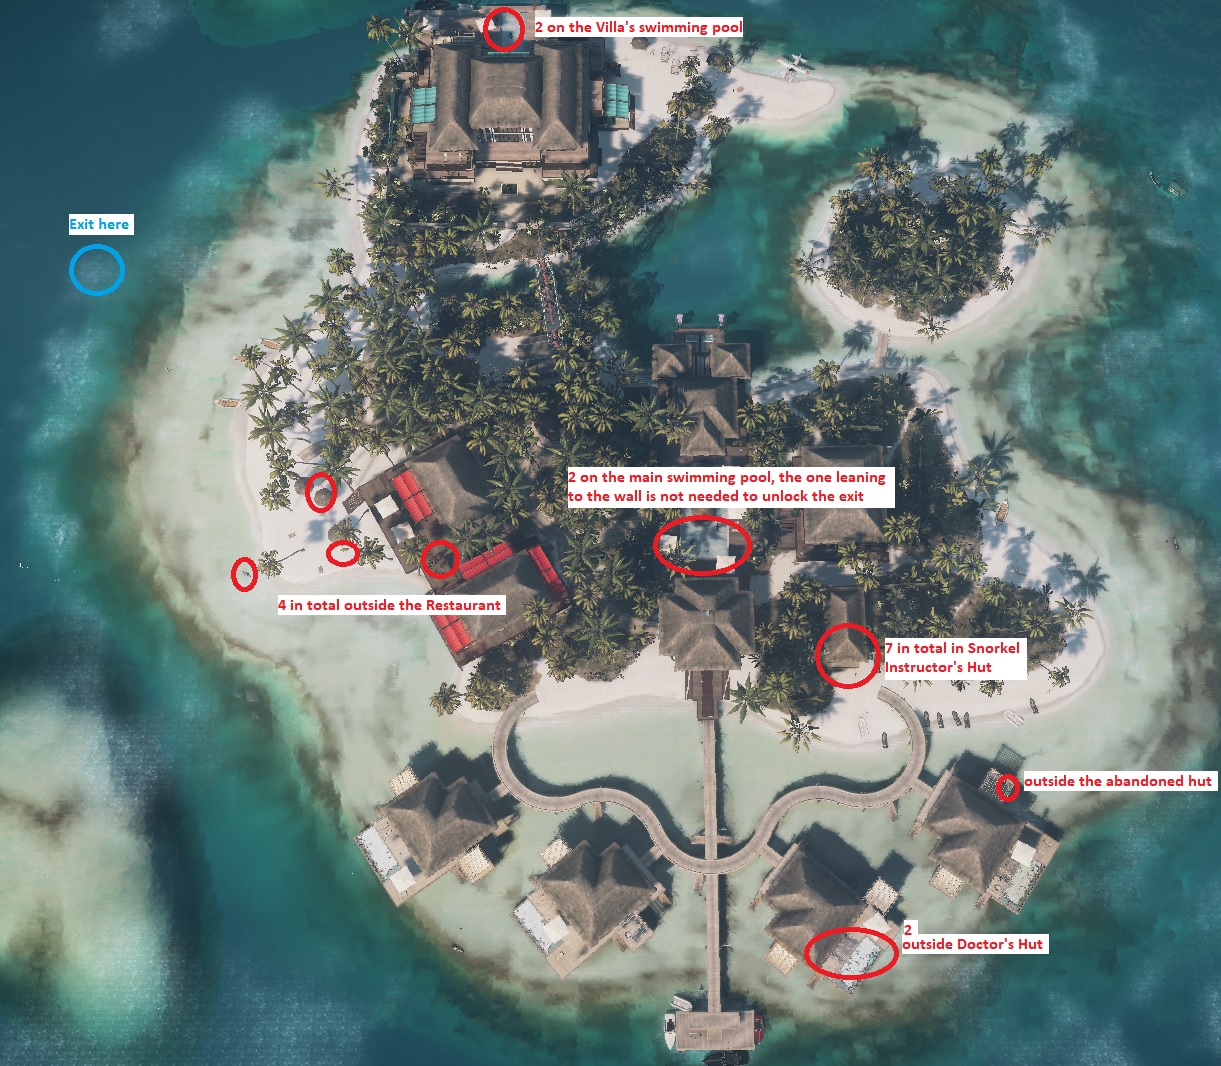 hitman-2-walkthrough-for-haven-island-last-resort-mission-steamah